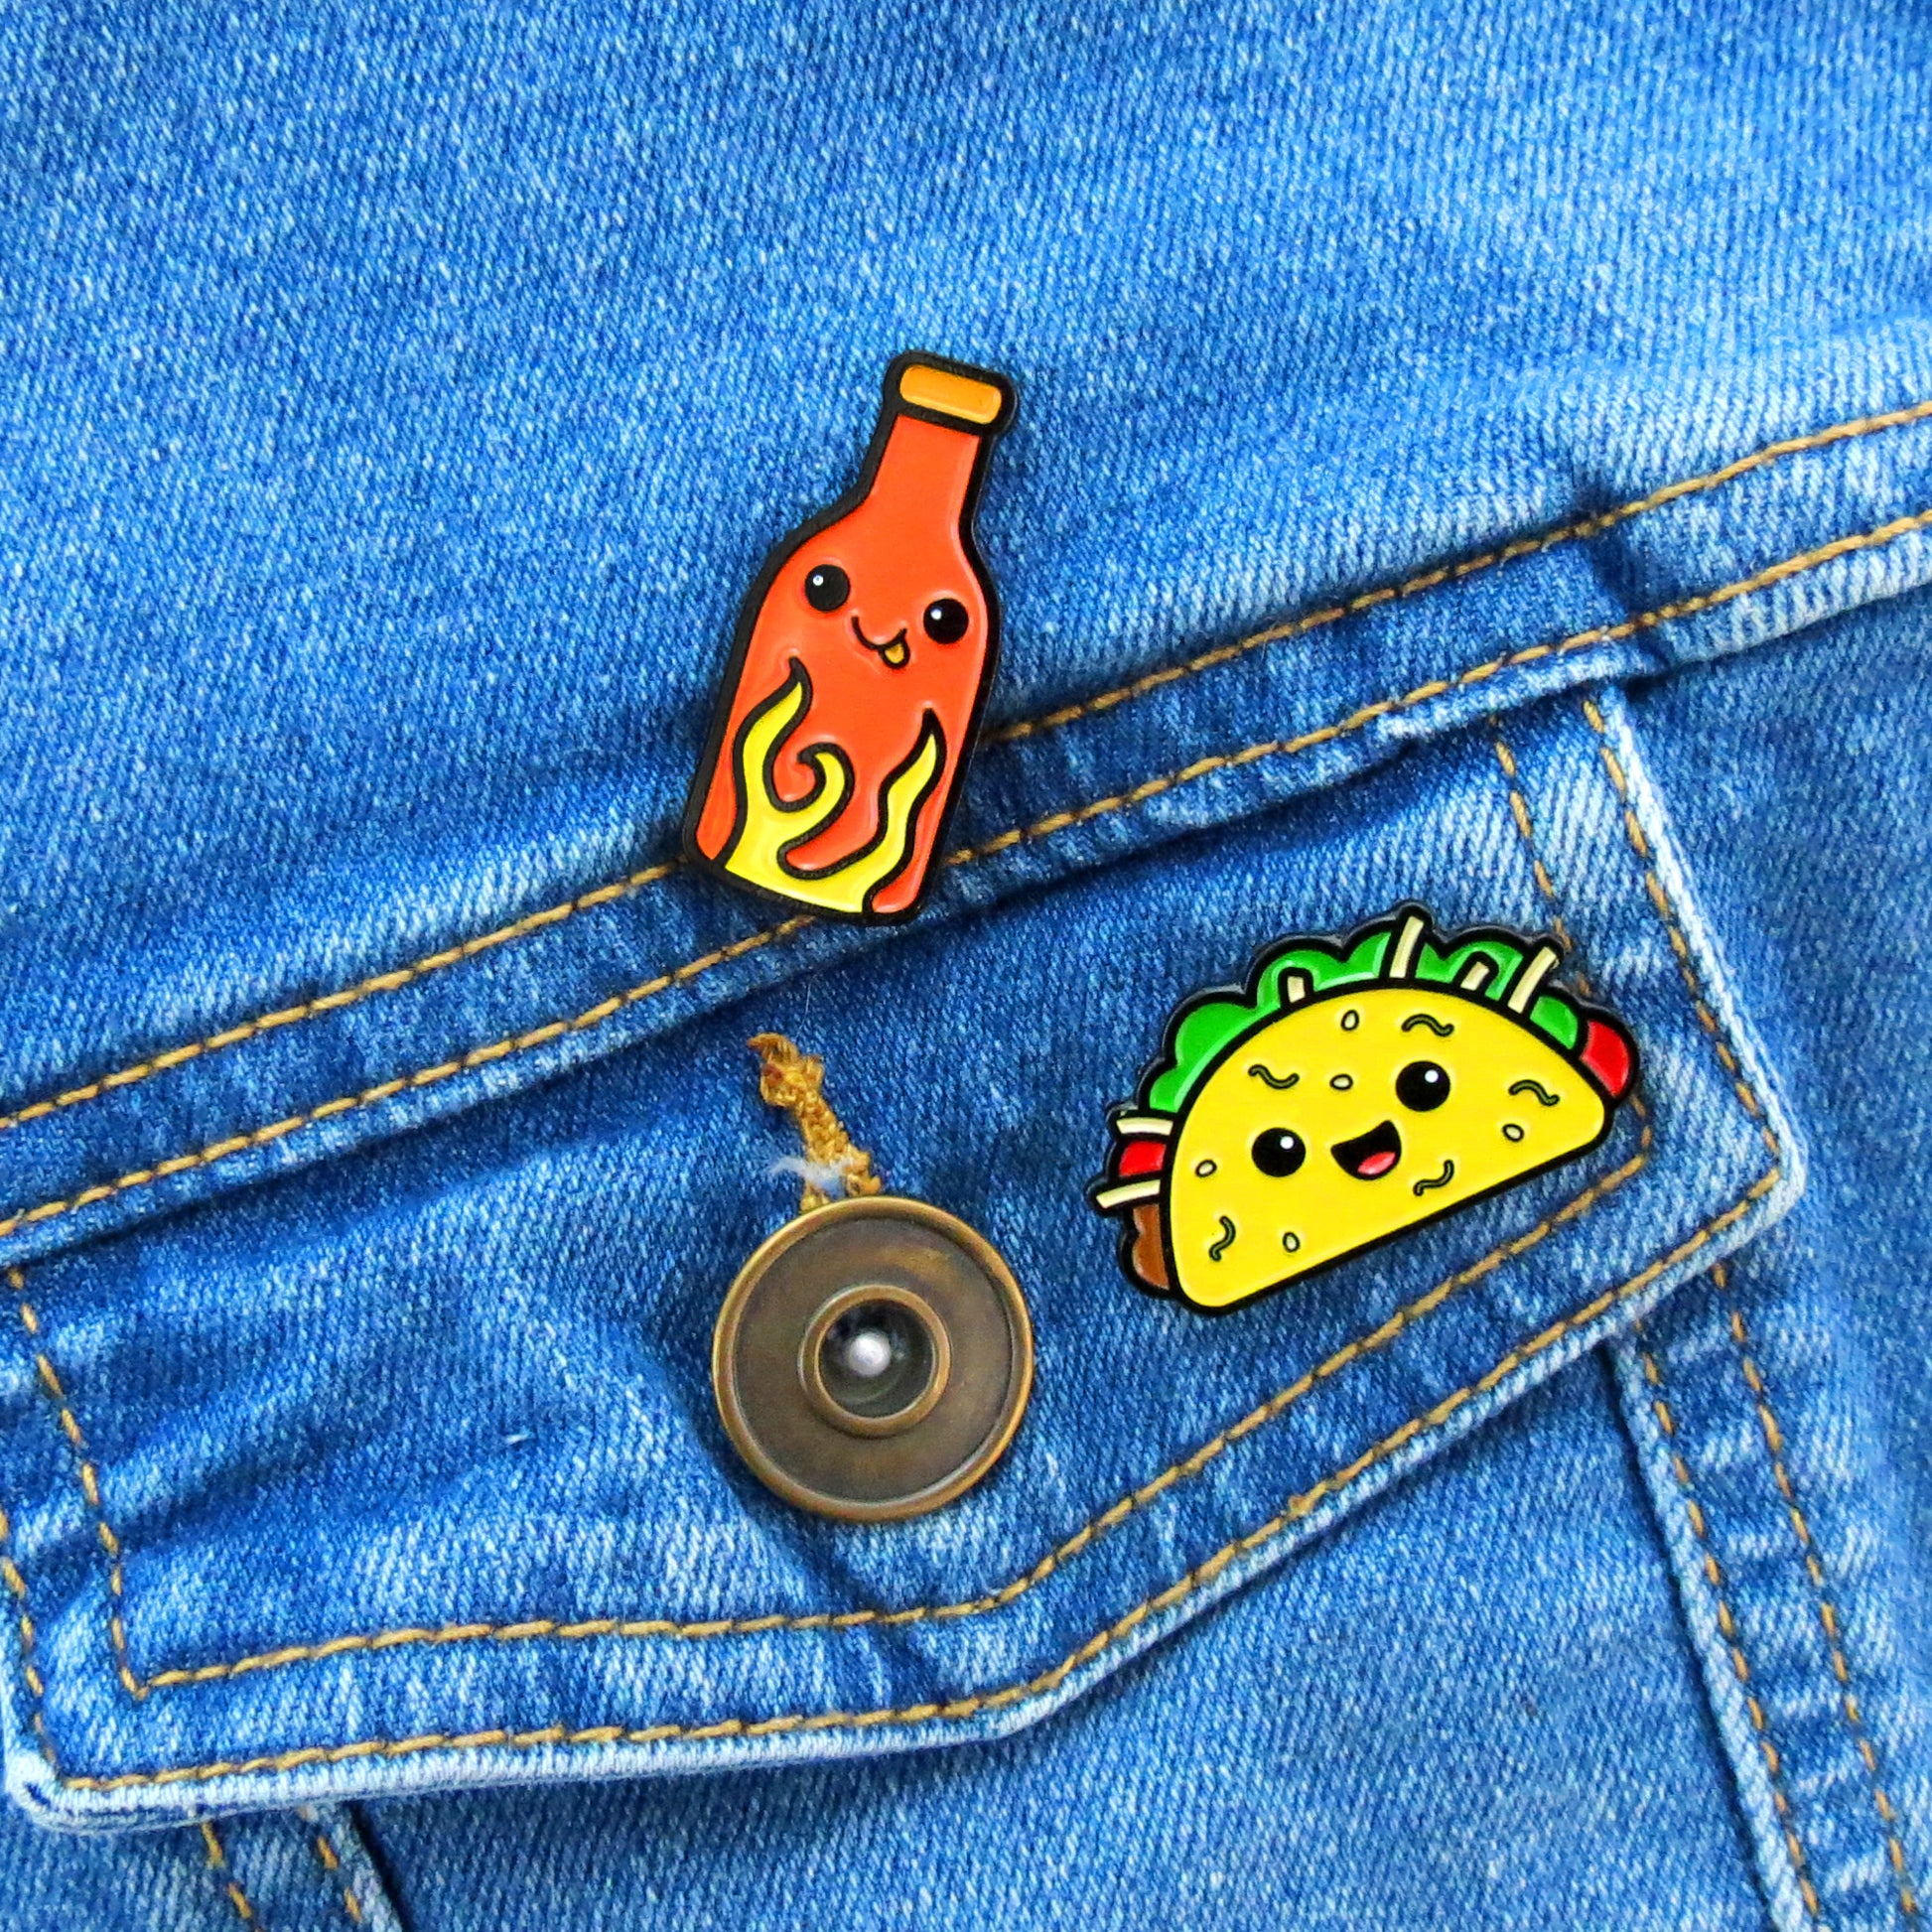 Taco and Hot Sauce enamel pins on jean jacket pocket